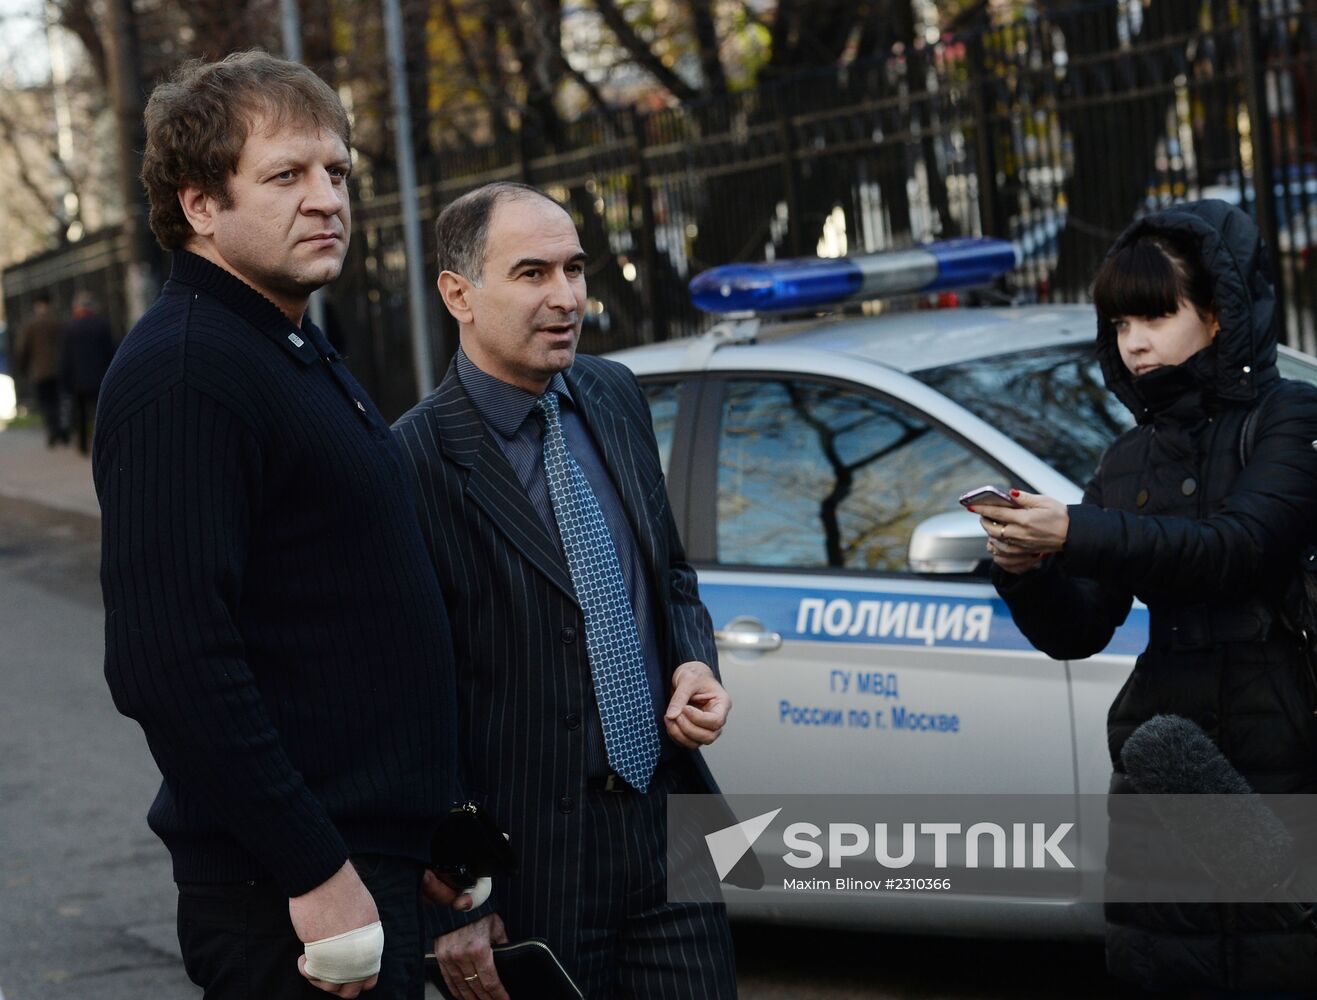 Alexander Yemelyanenko arives at Moscow police for interrogation